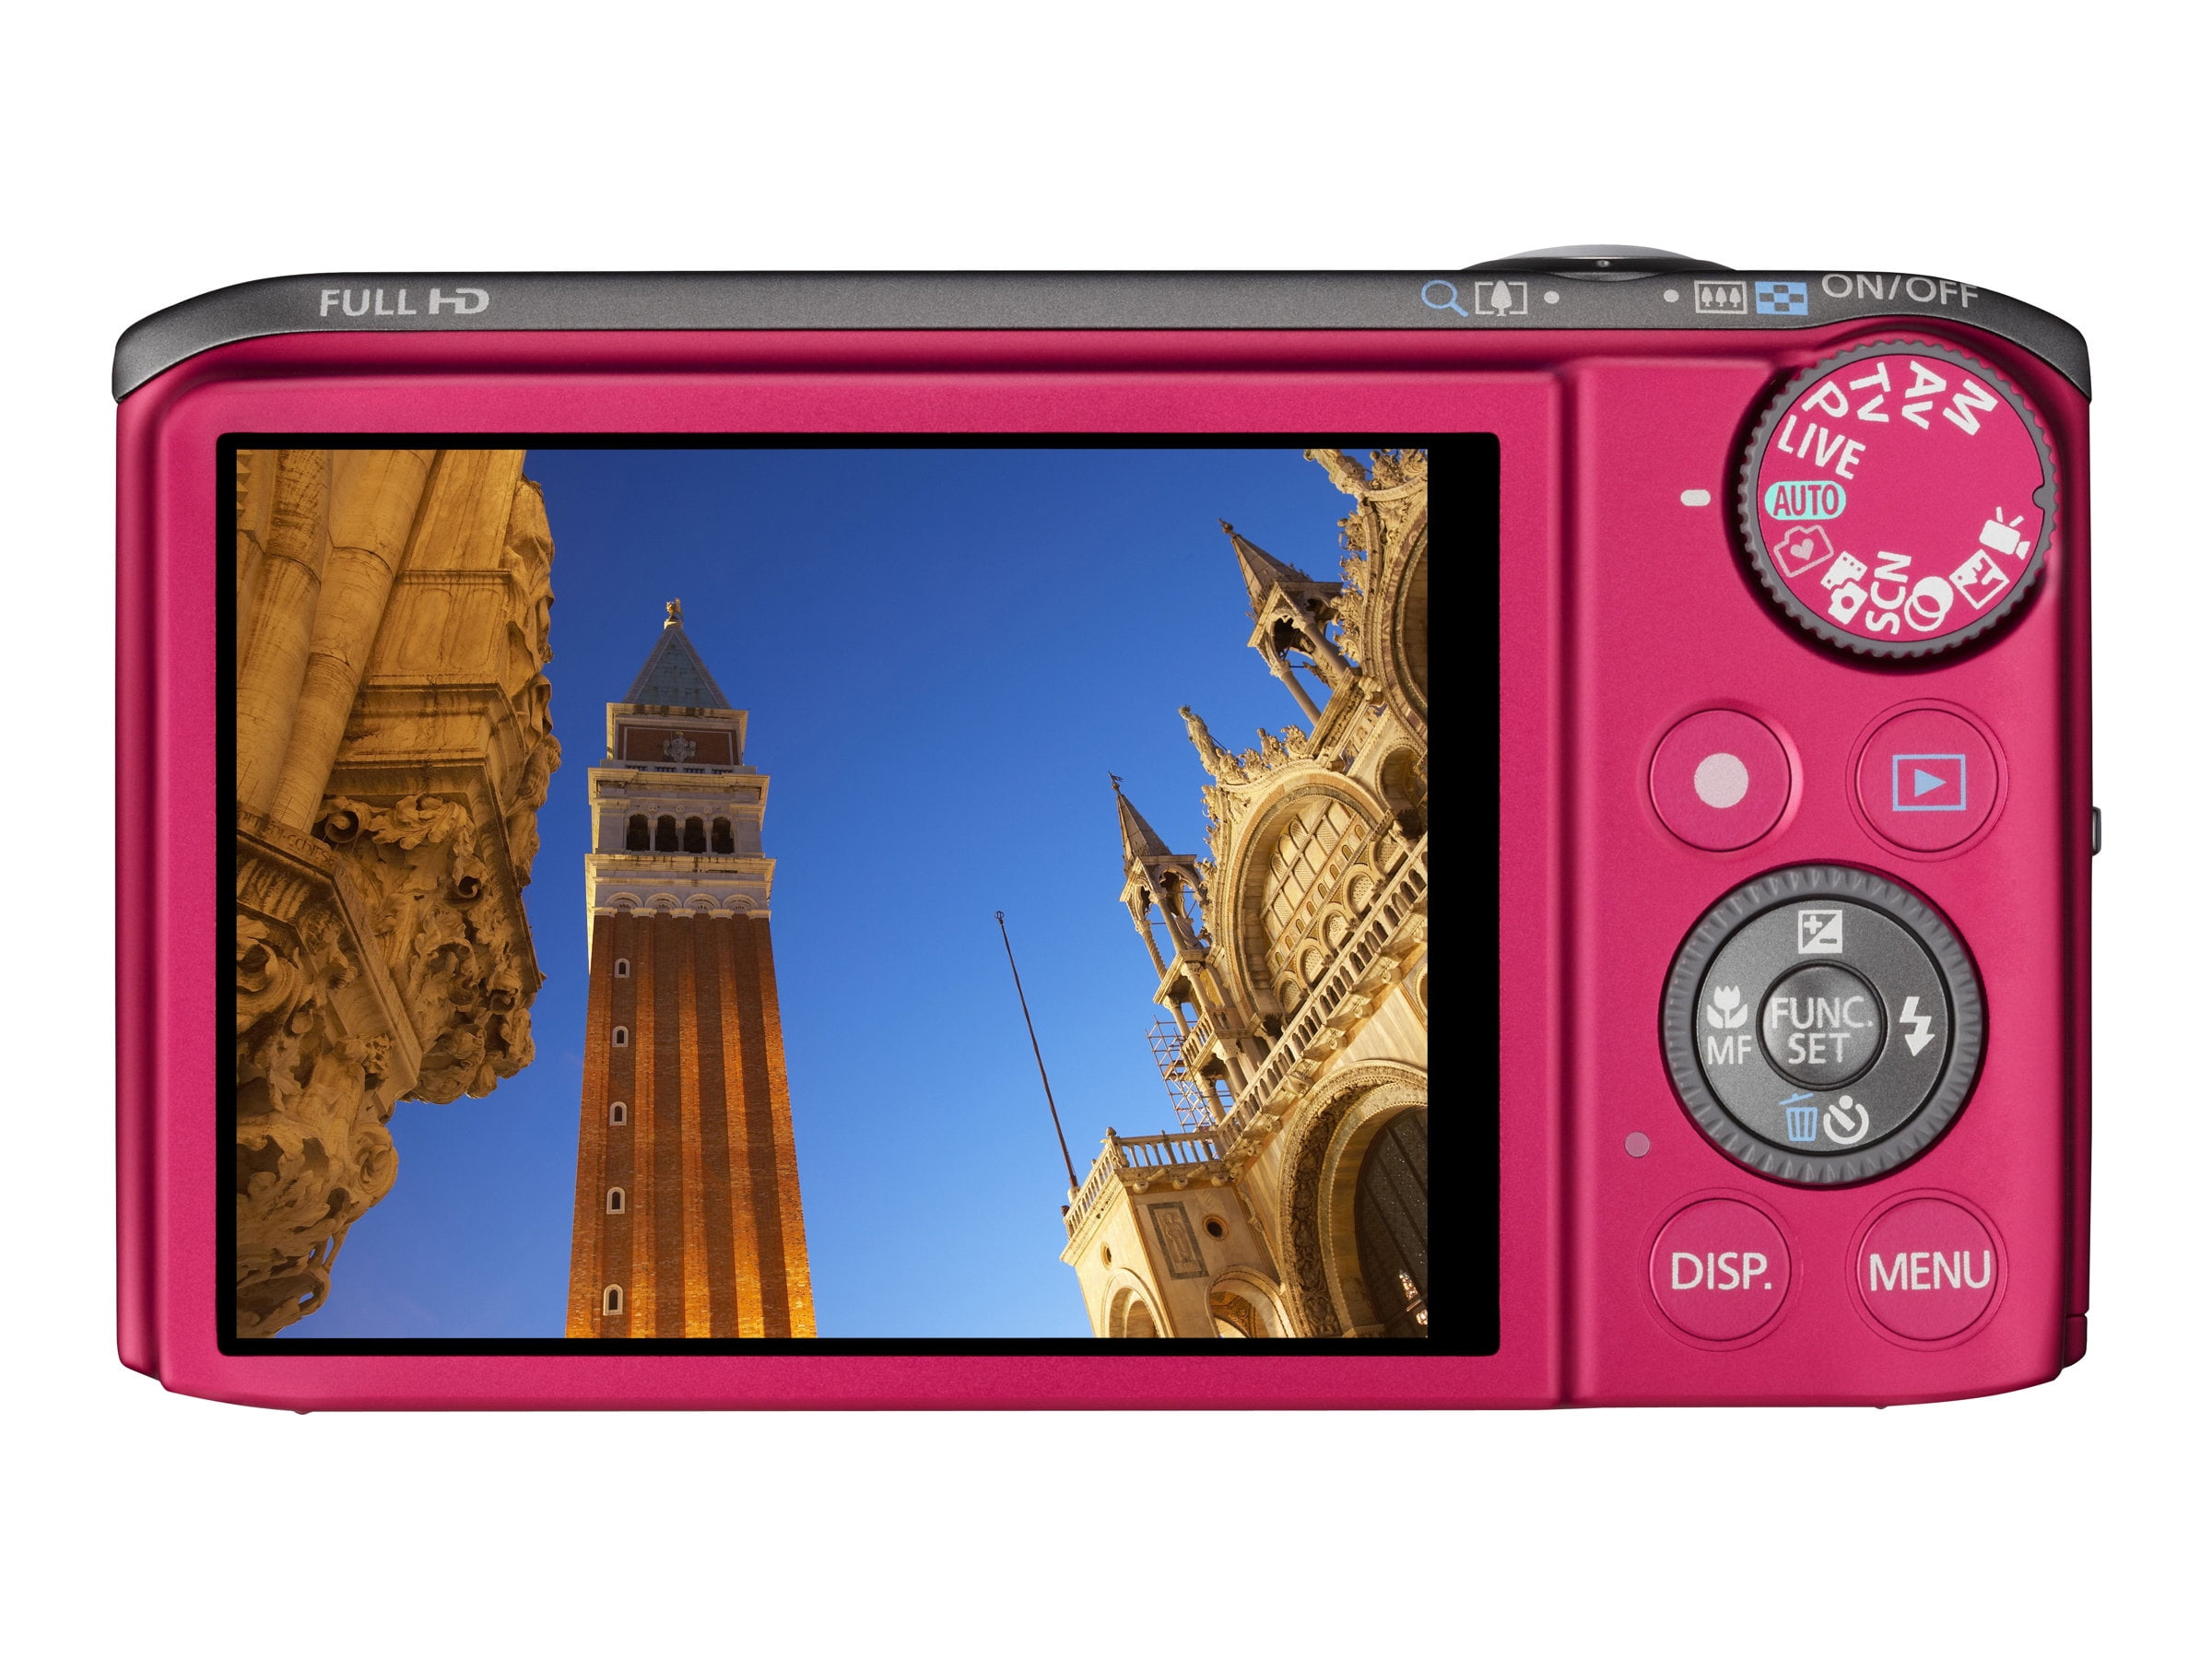 Canon PowerShot SX260 HS - Digital camera - compact - 12.1 MP 